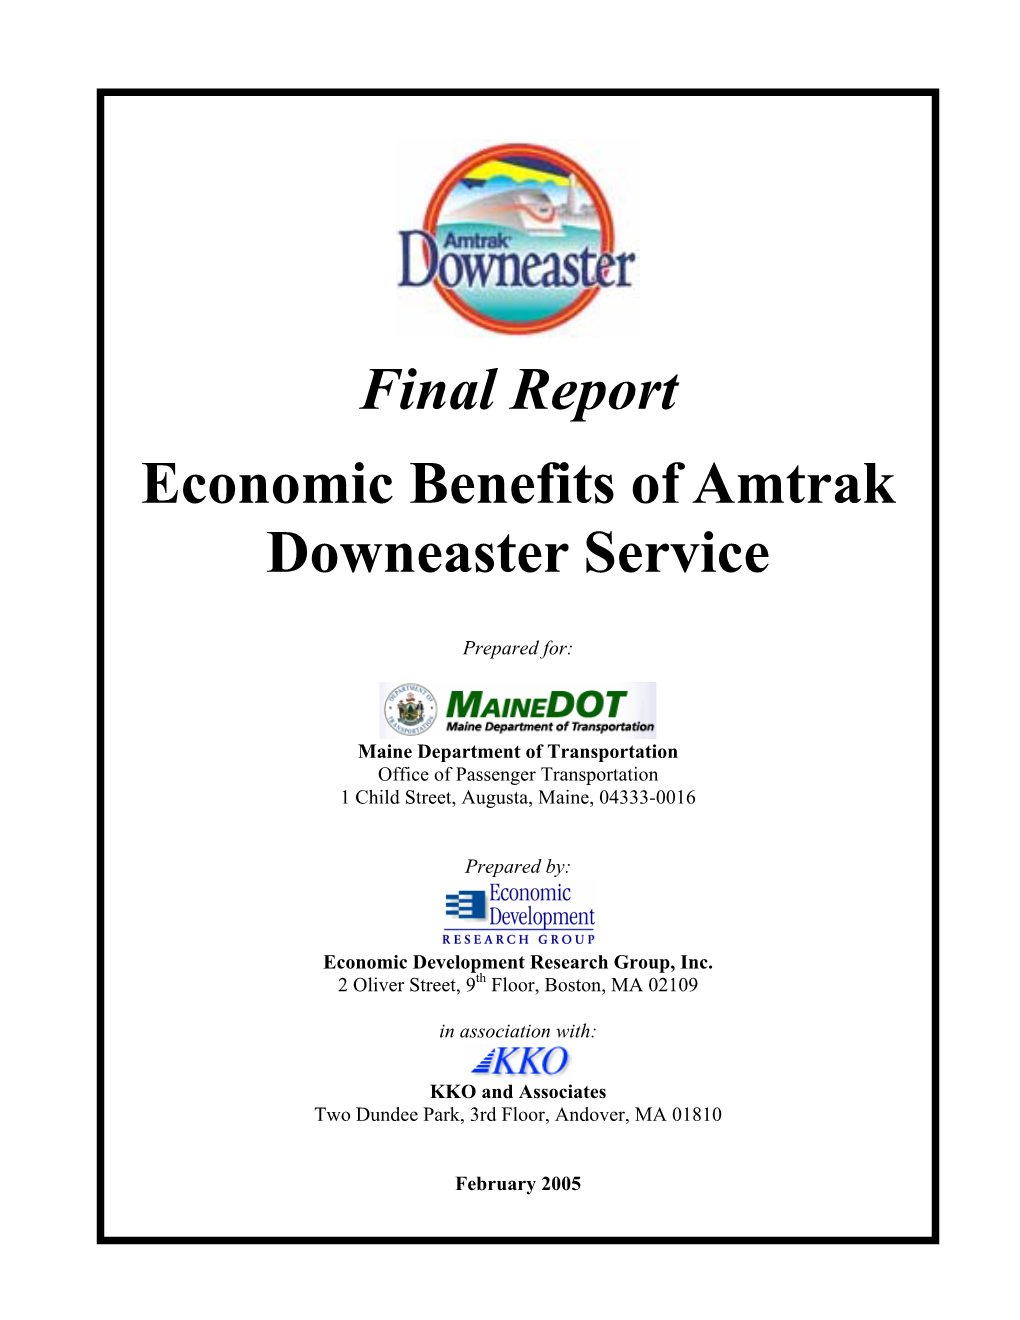 Final Report Economic Benefits of Amtrak Downeaster Service